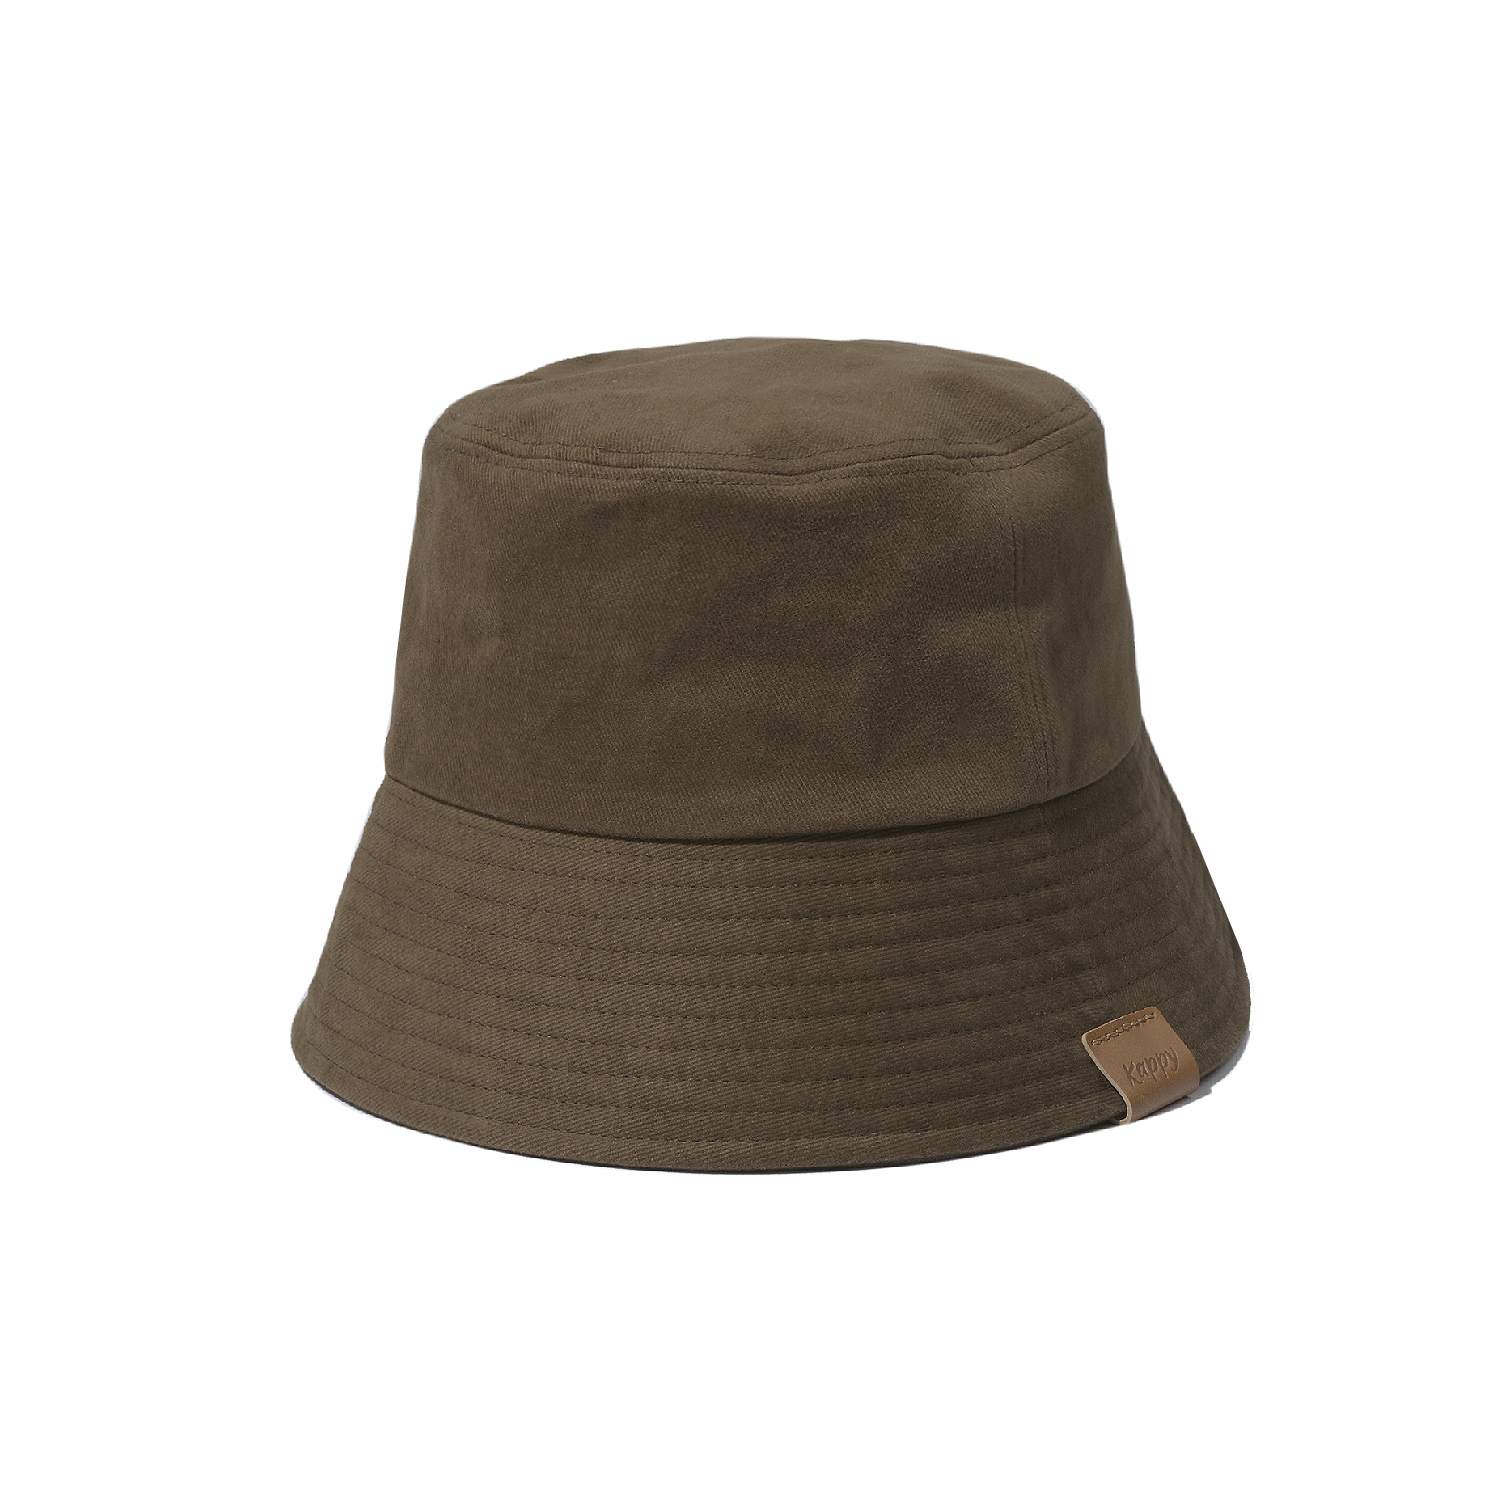 Standard bucket hat brown